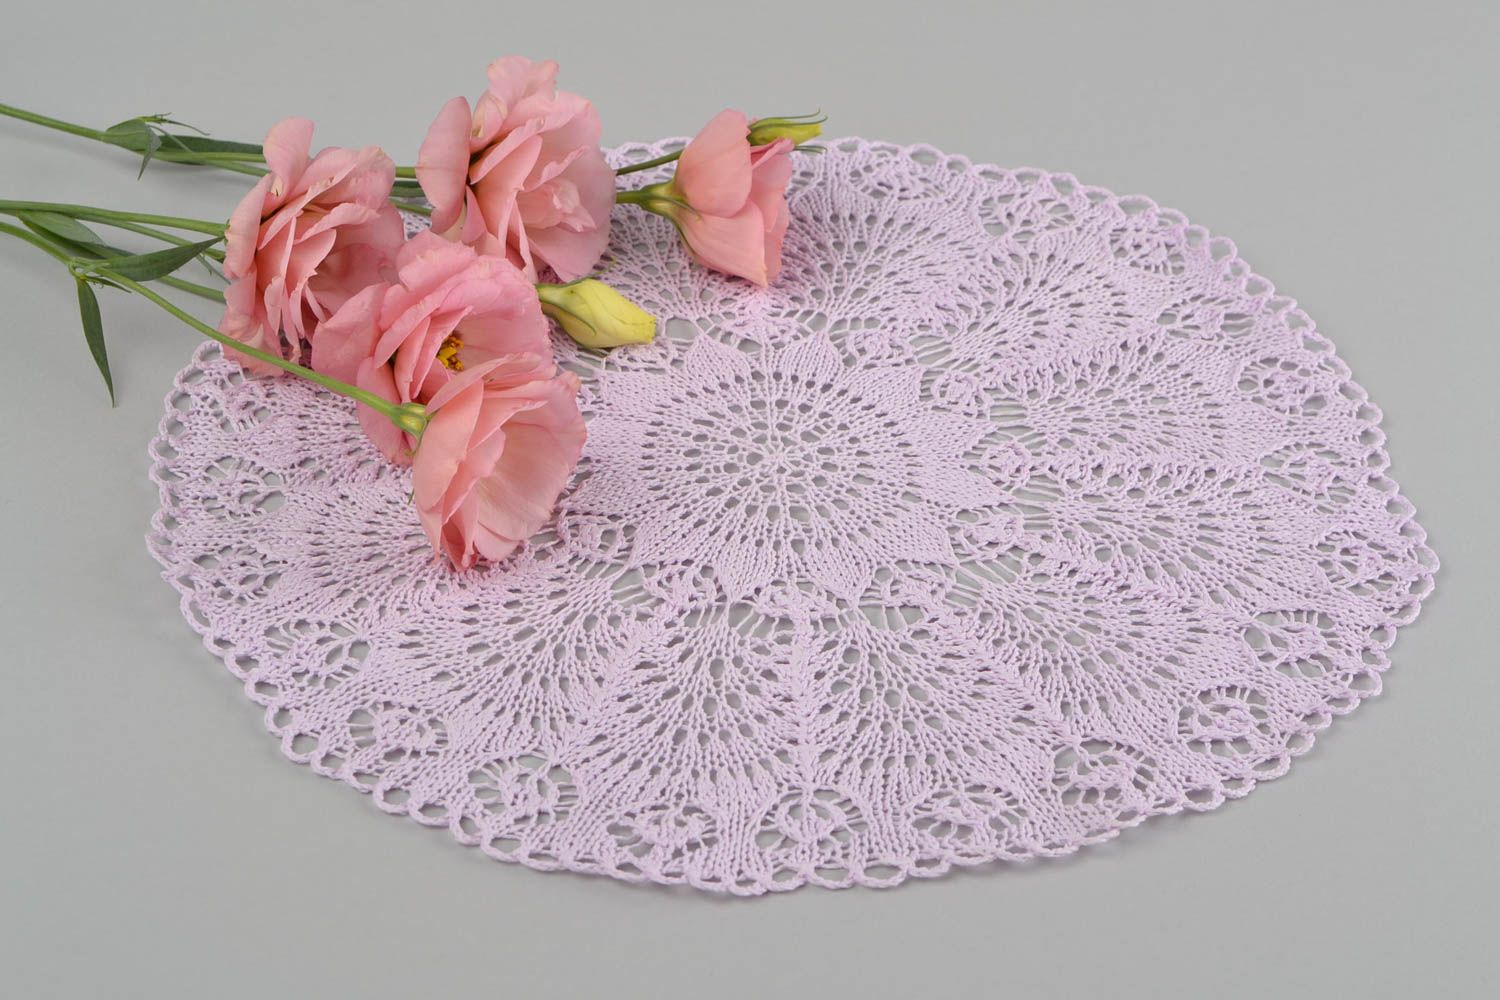 Handmade fabric napkin knitted napkin for table home textiles decor ideas photo 1